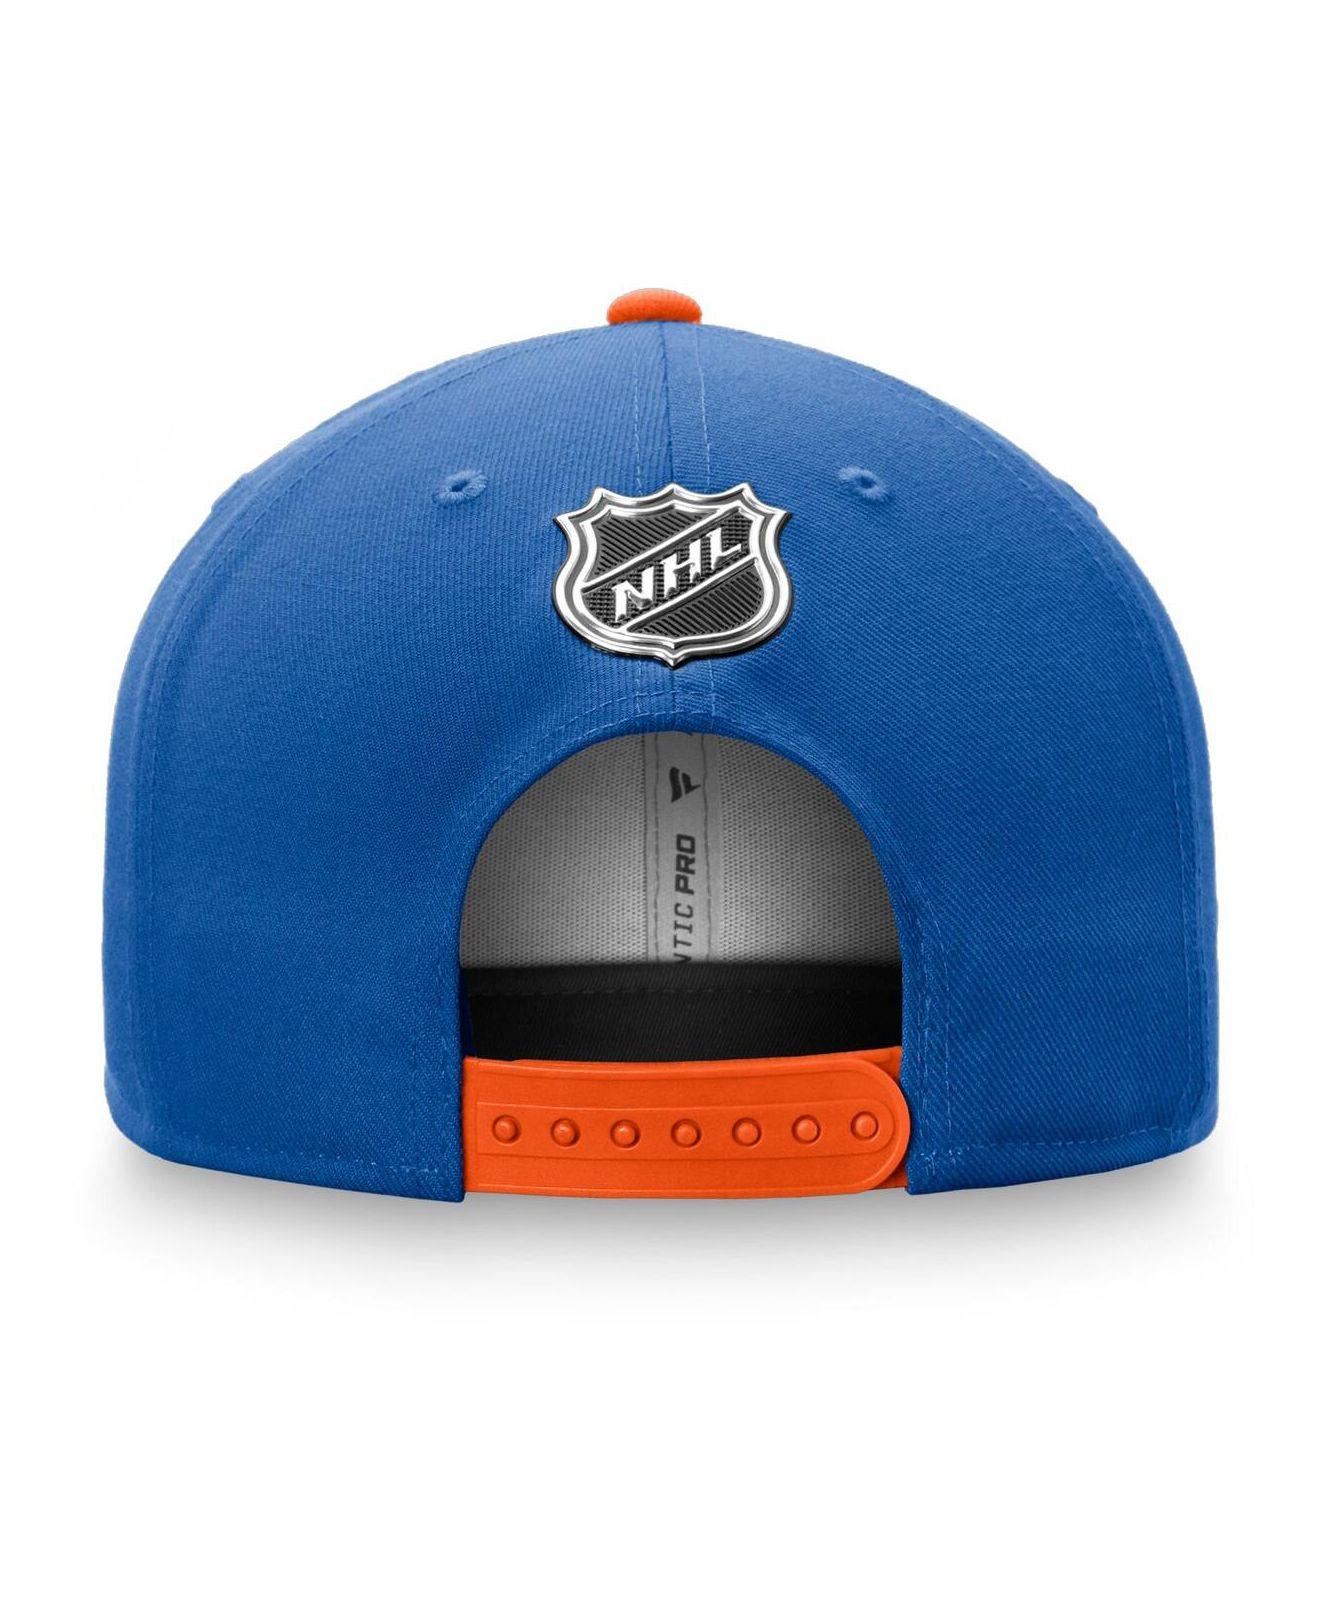 NHL Fanatics Branded Authentic Pro Hockey Fights Cancer Snapback Hat -  White/Purple